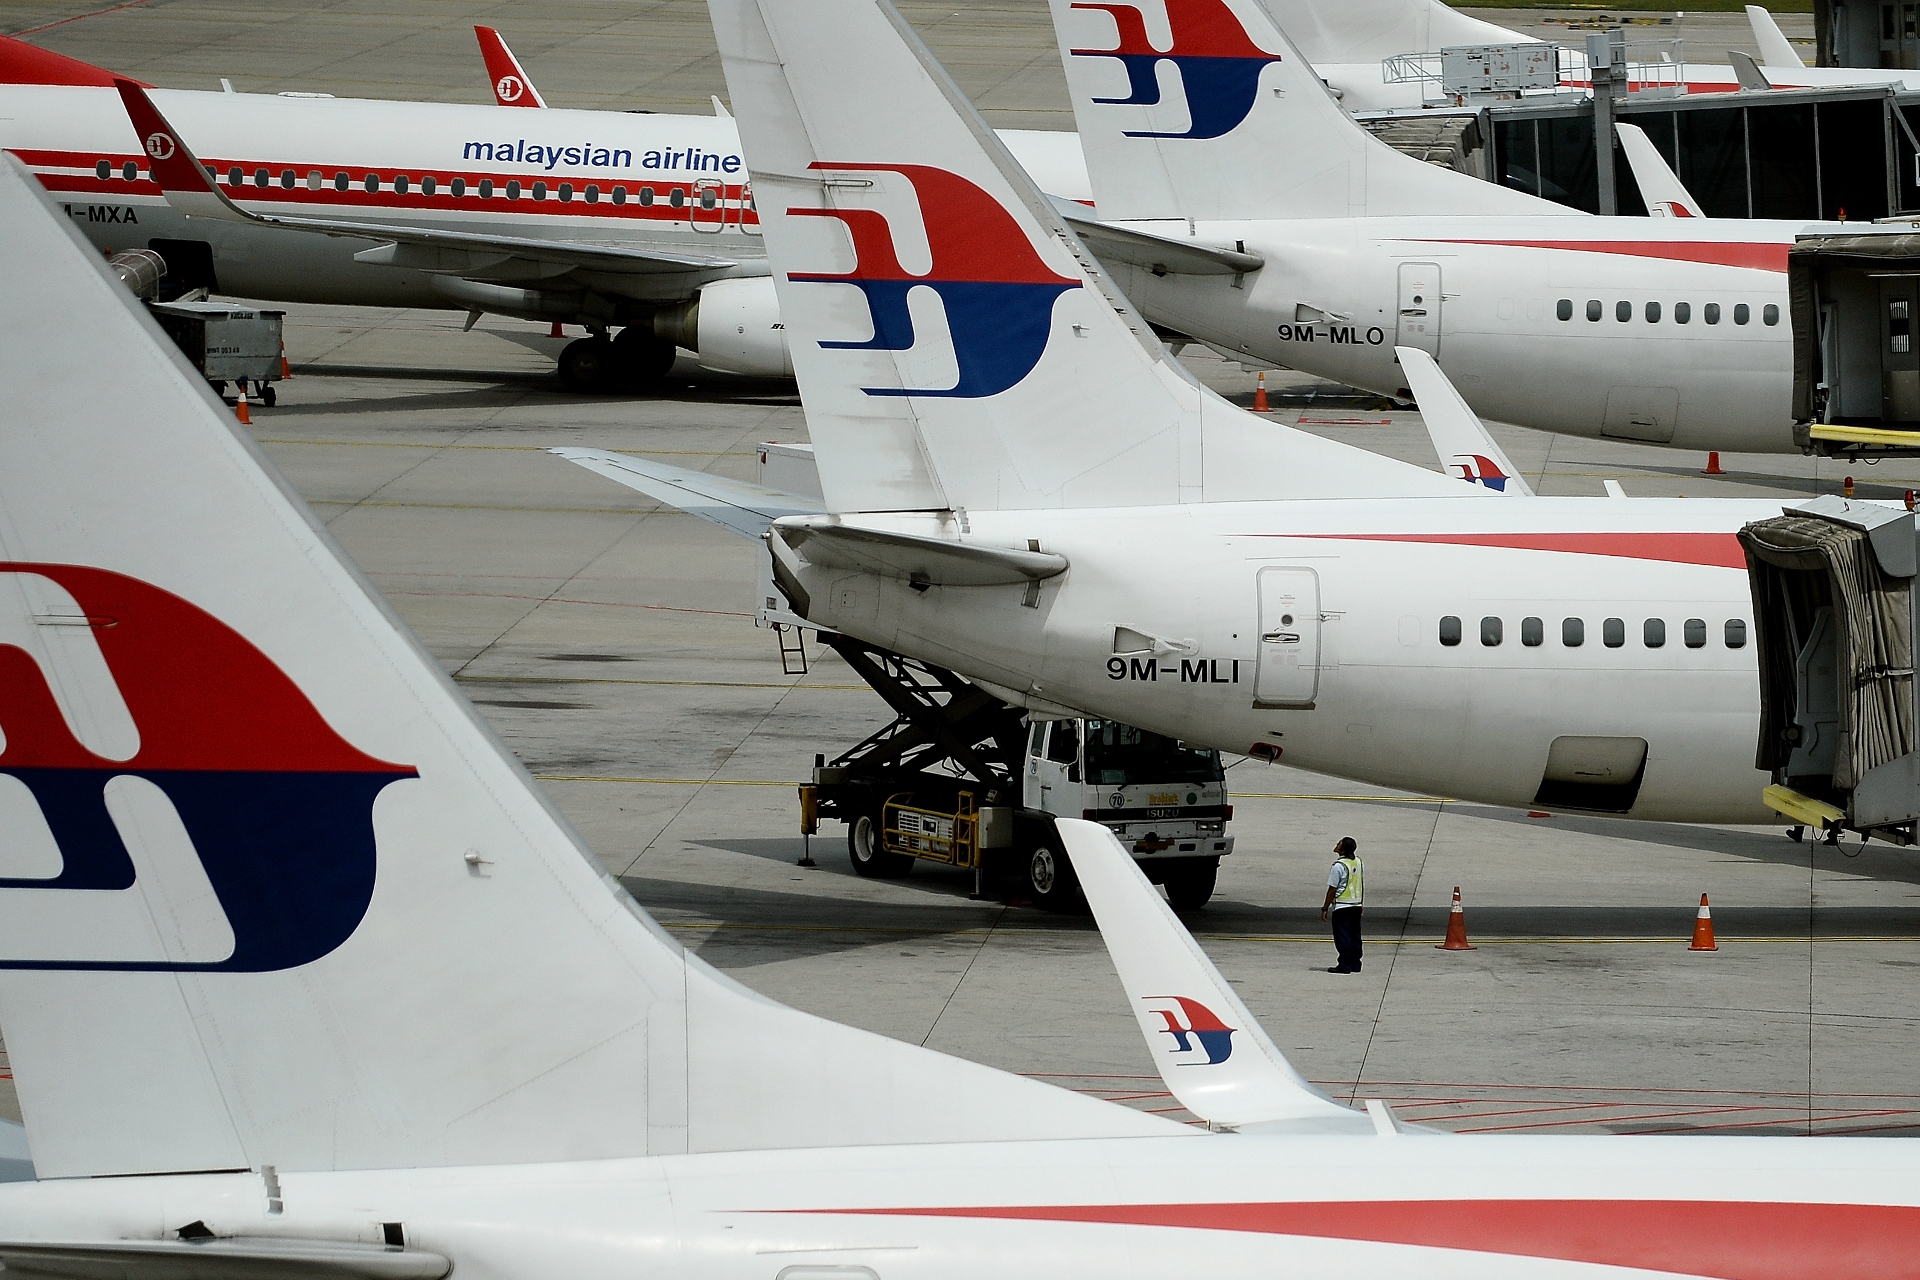 Vuelo 370 de Malaysia Airlines